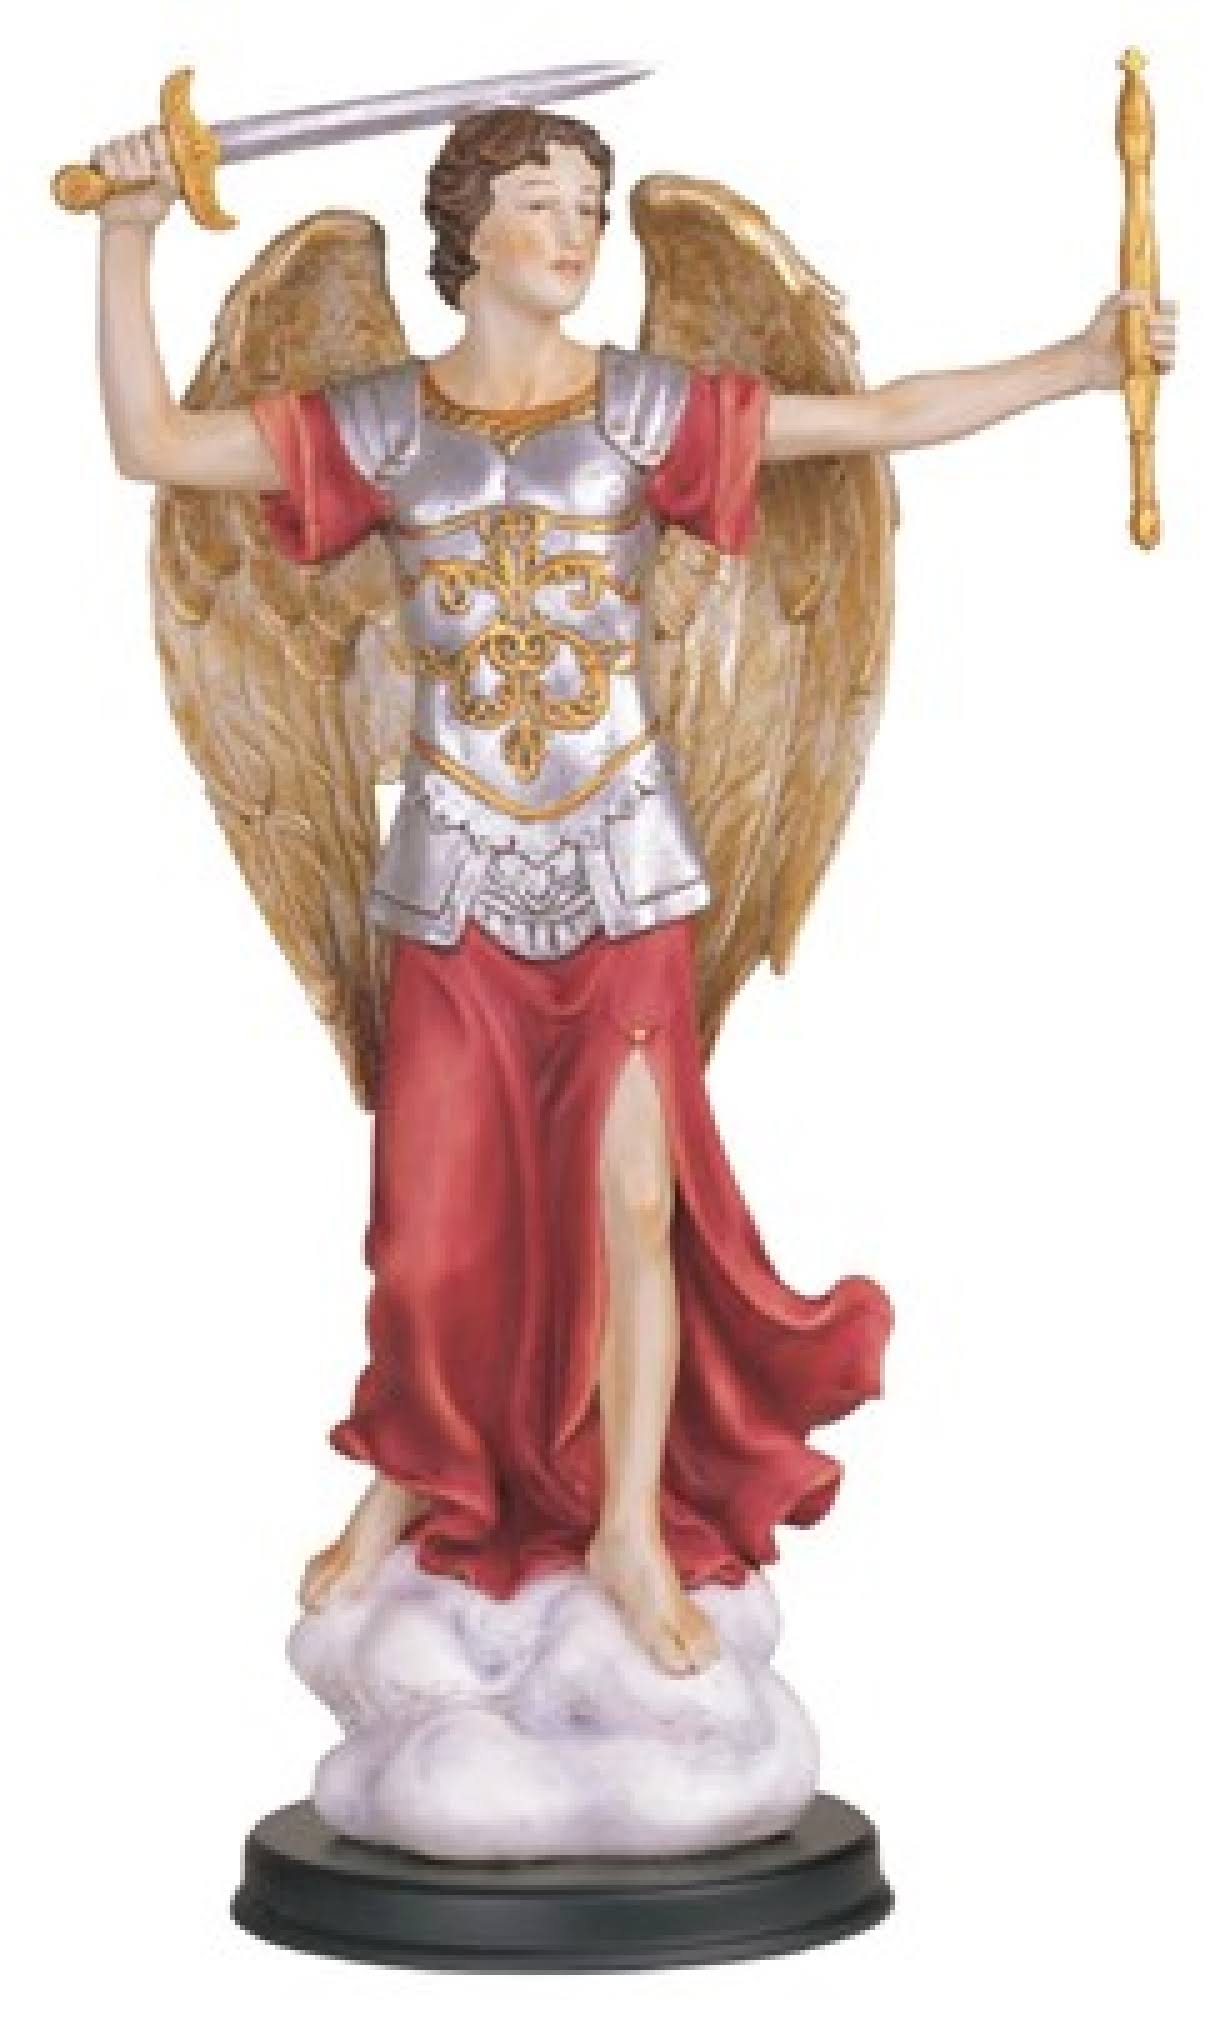 Stealstreet Archangel Michael Holy Religious Decoration Decor Figurine - 12"